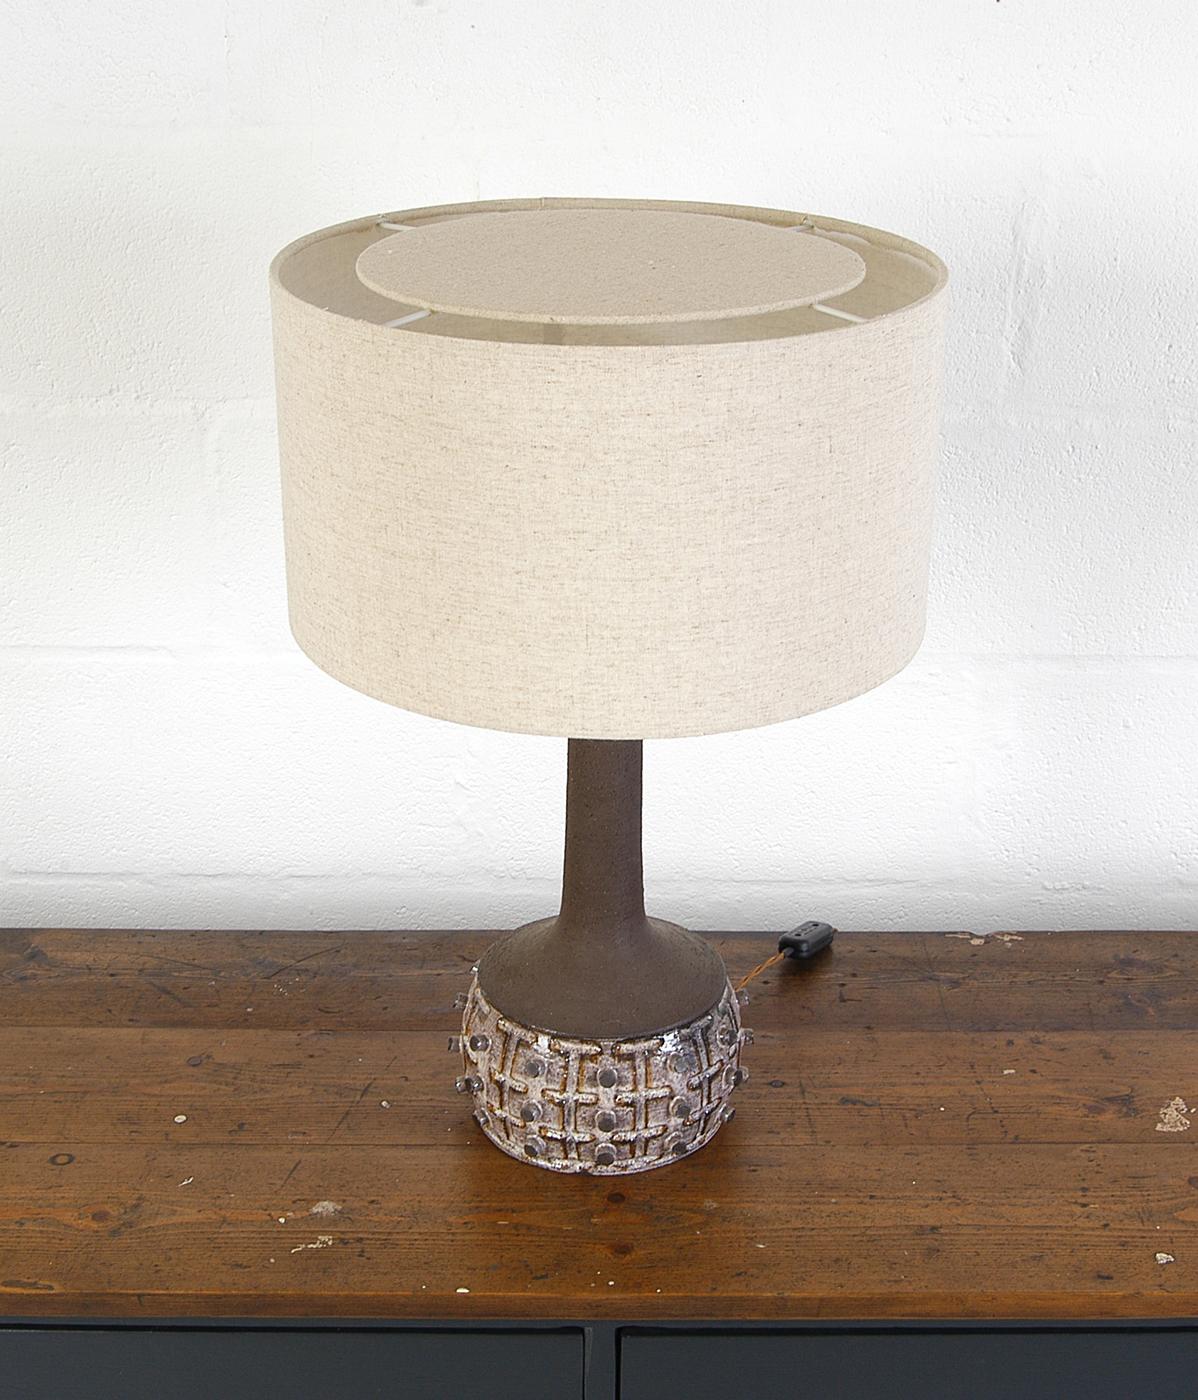 Rustic 1970s Danish Stoneware Table Lamp Designed by Jette Helleroe for Axella Design